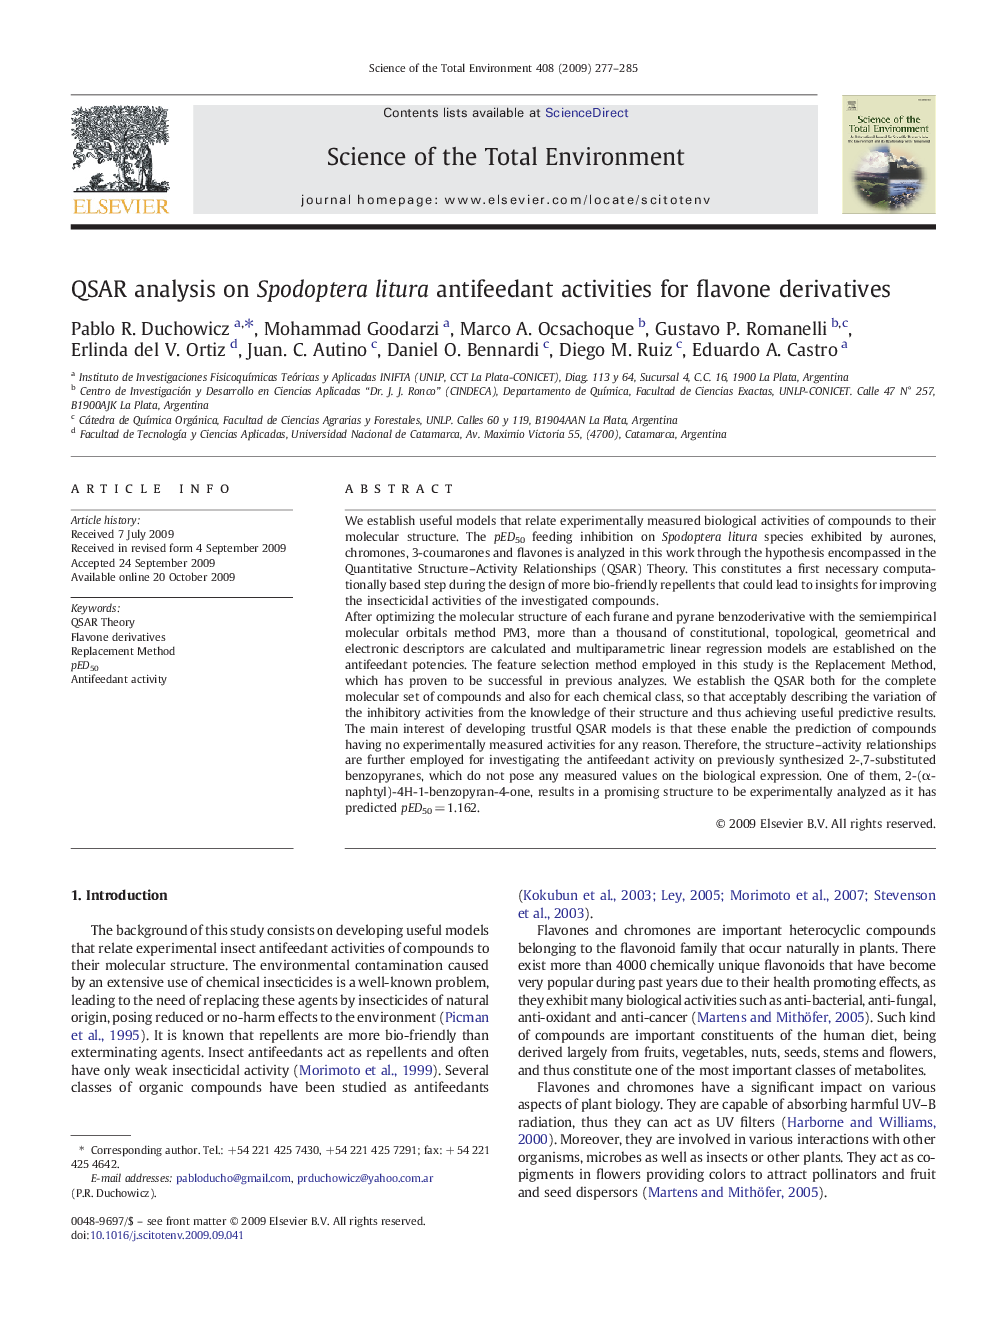 QSAR analysis on Spodoptera litura antifeedant activities for flavone derivatives